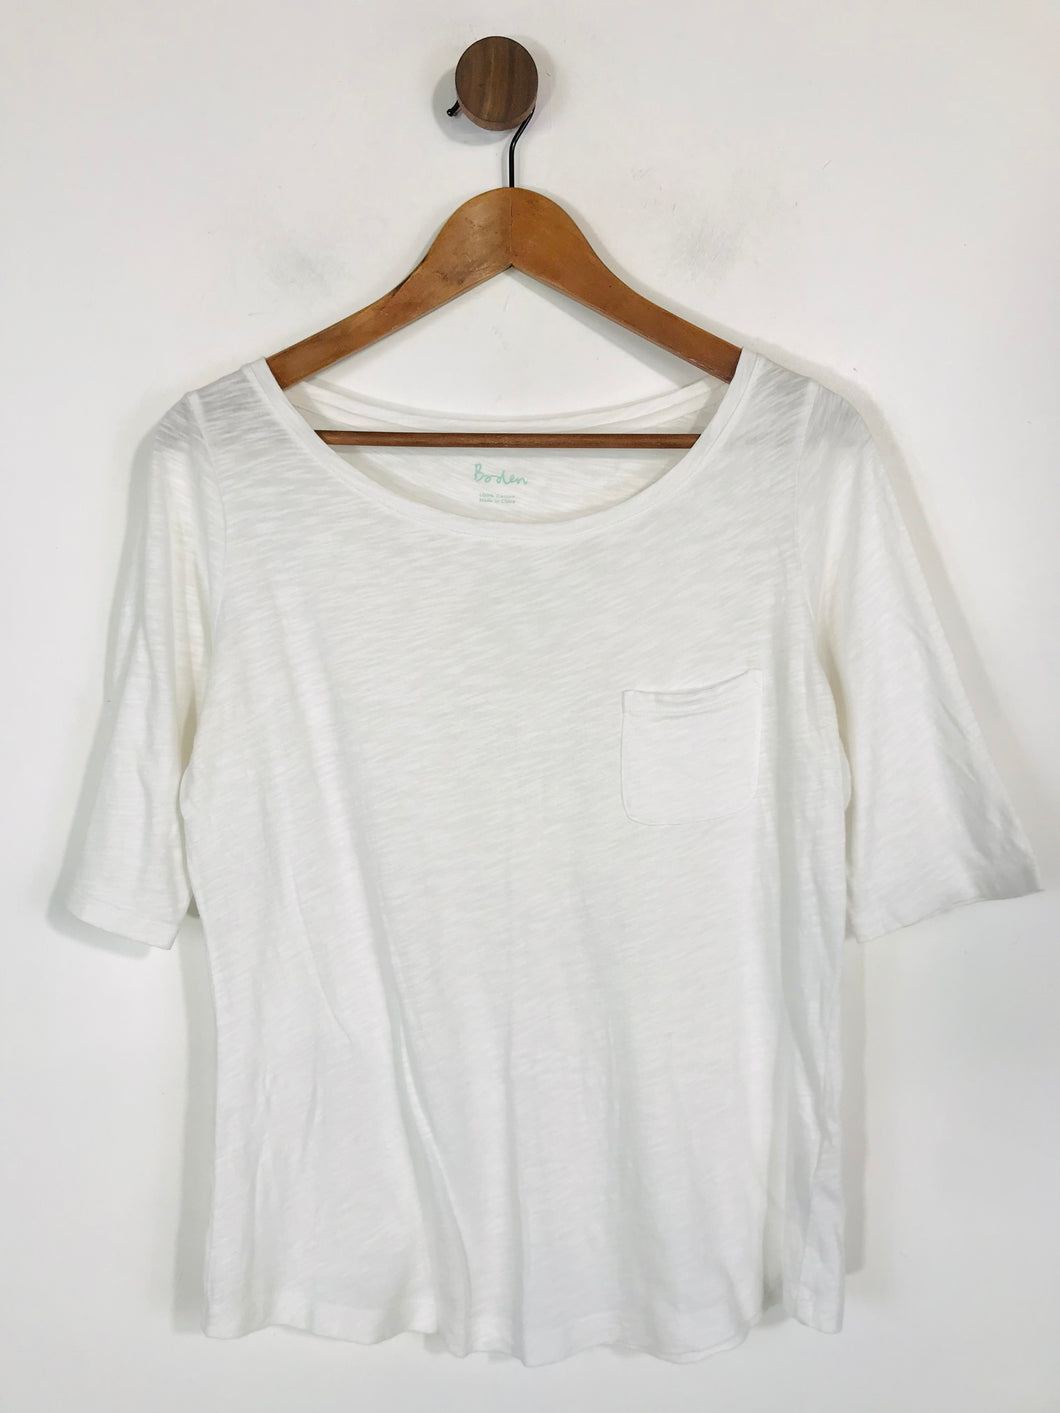 Boden Women's Cotton T-Shirt | UK12 | White